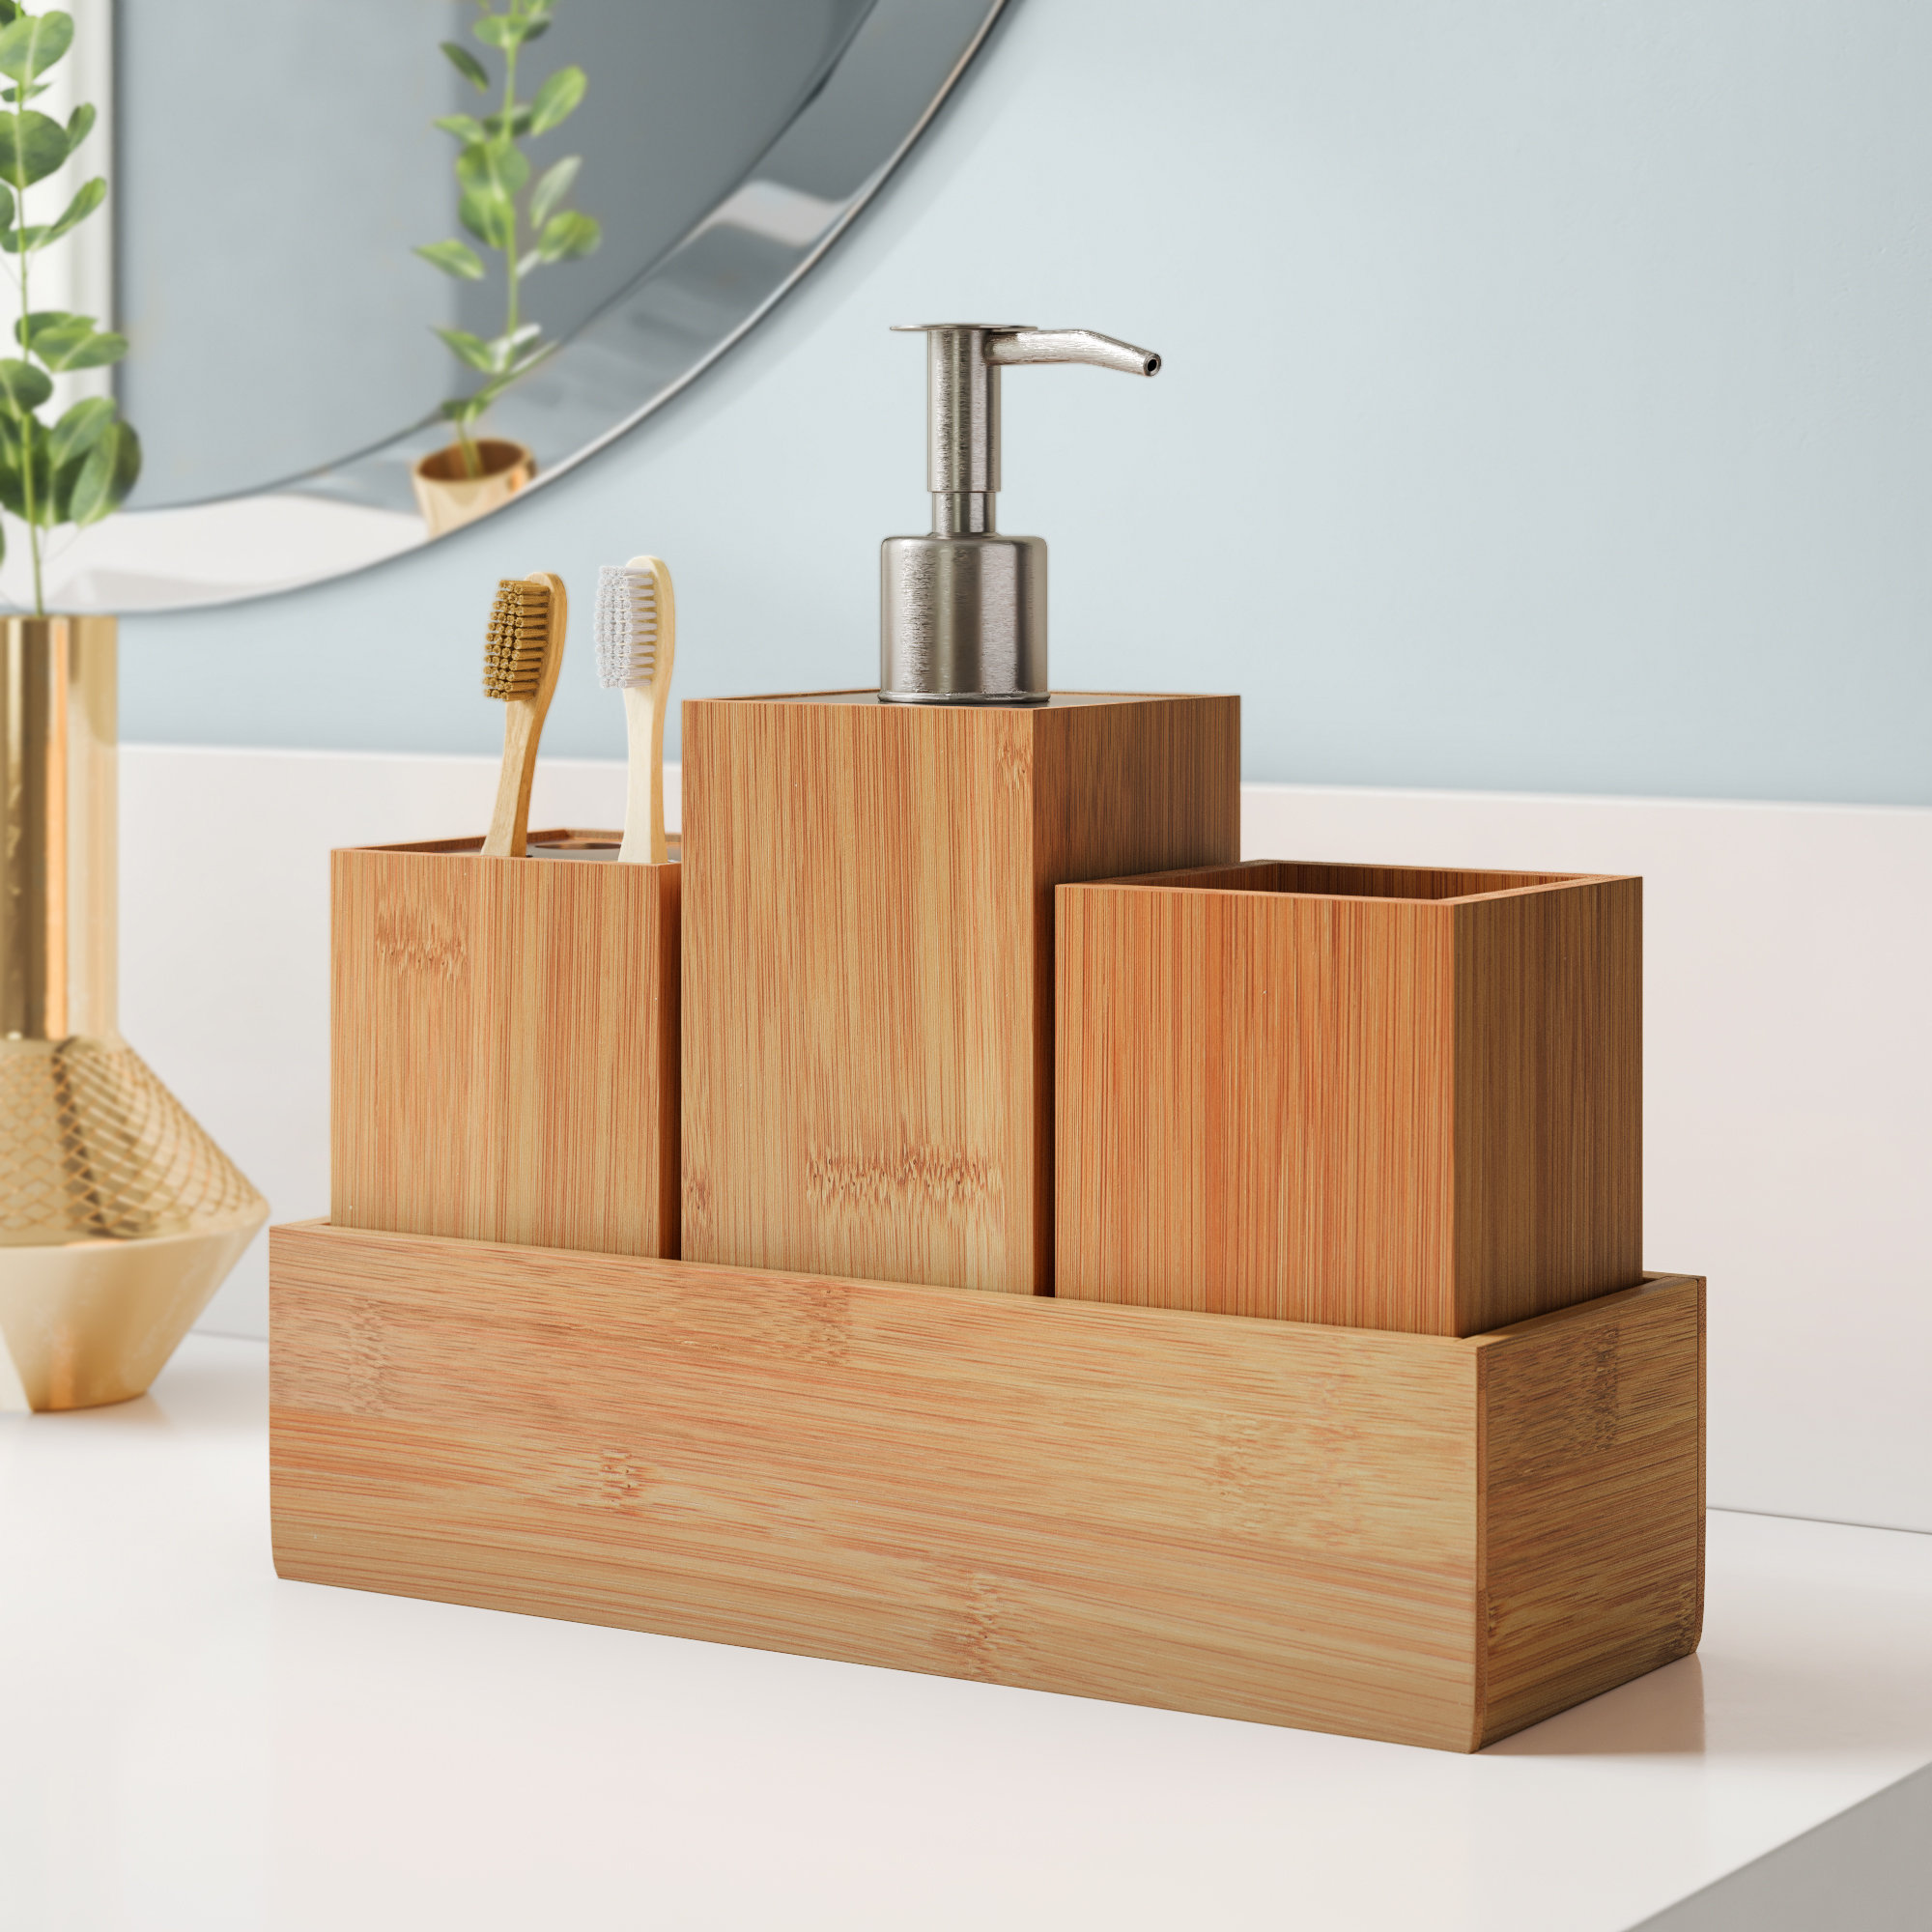 Co.® Moraga Bamboo 4 Piece Bathroom Accessory Set Reviews | Wayfair